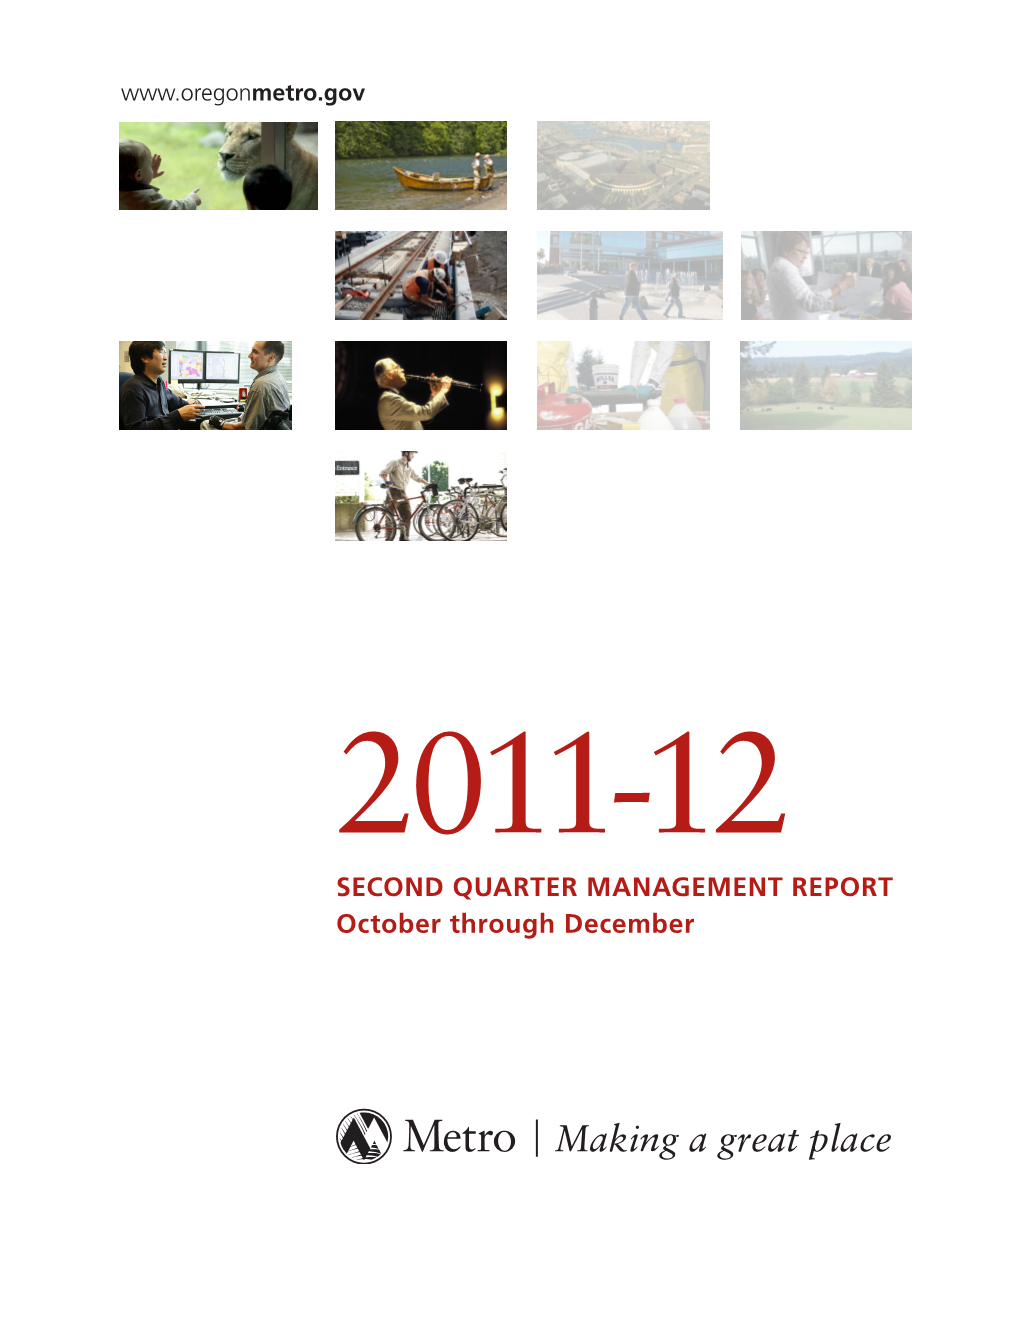 SECOND QUARTER MANAGEMENT REPORT October Through December FY 2011-12 Second Quarter Management Report Table of Contents